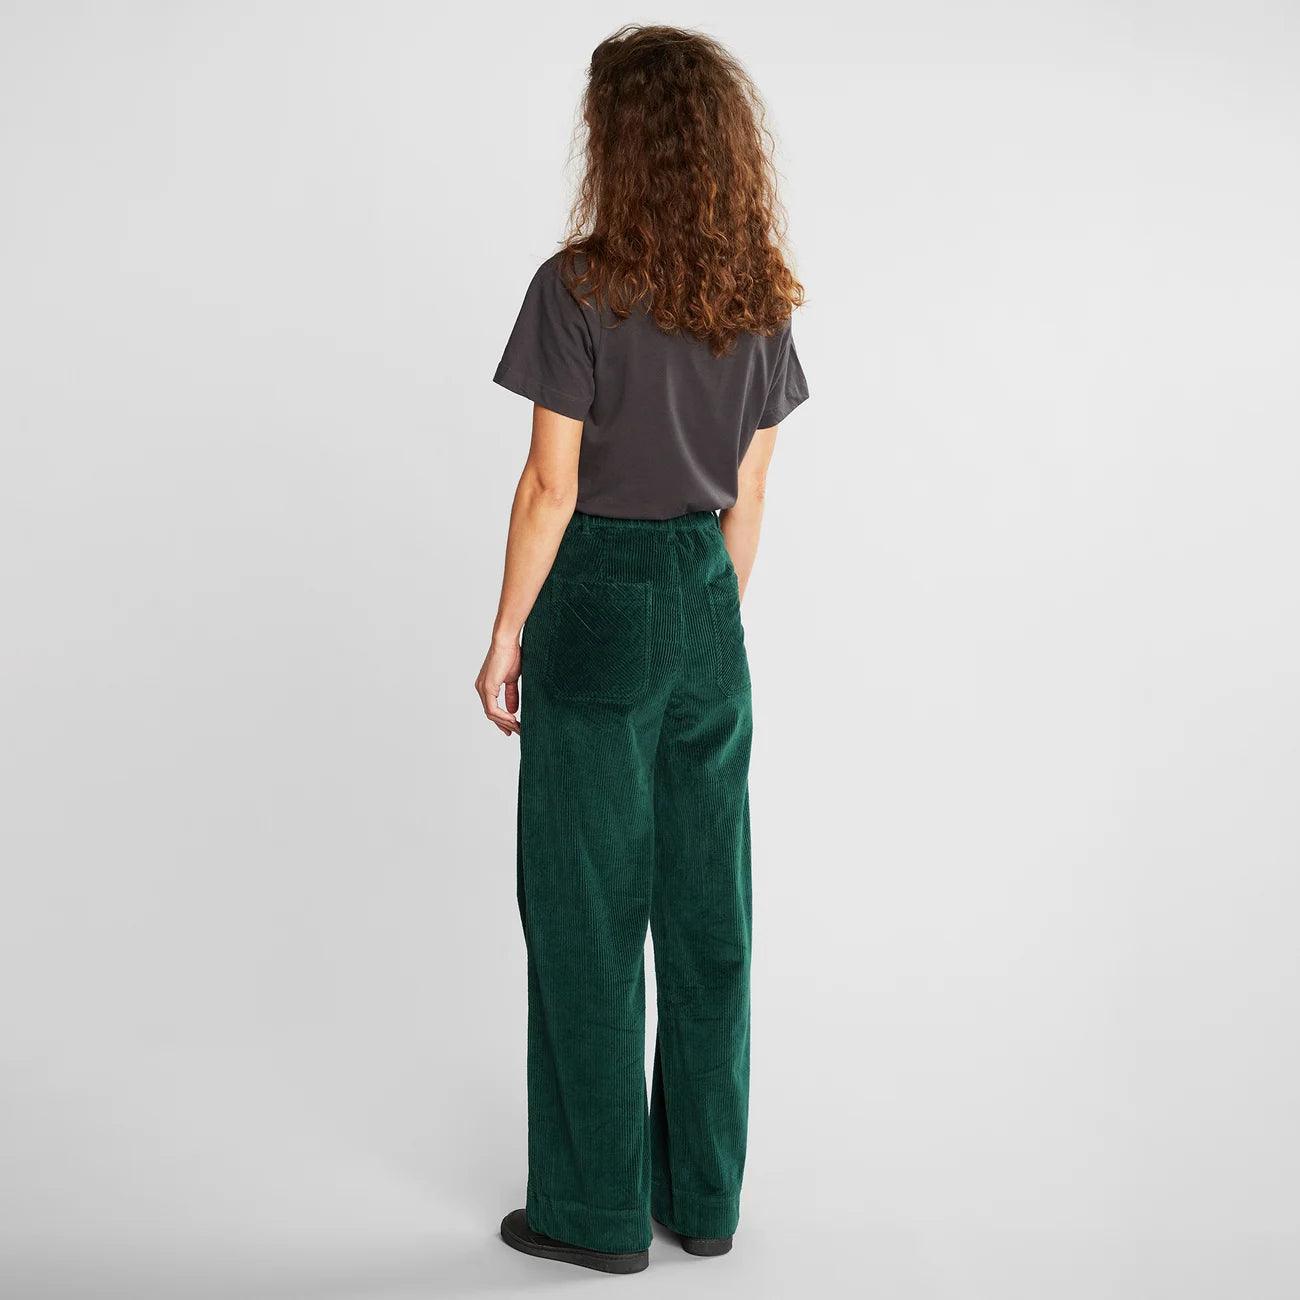 Pantalones Workwear Vara Corduroy Verde Oscuro - ECRU